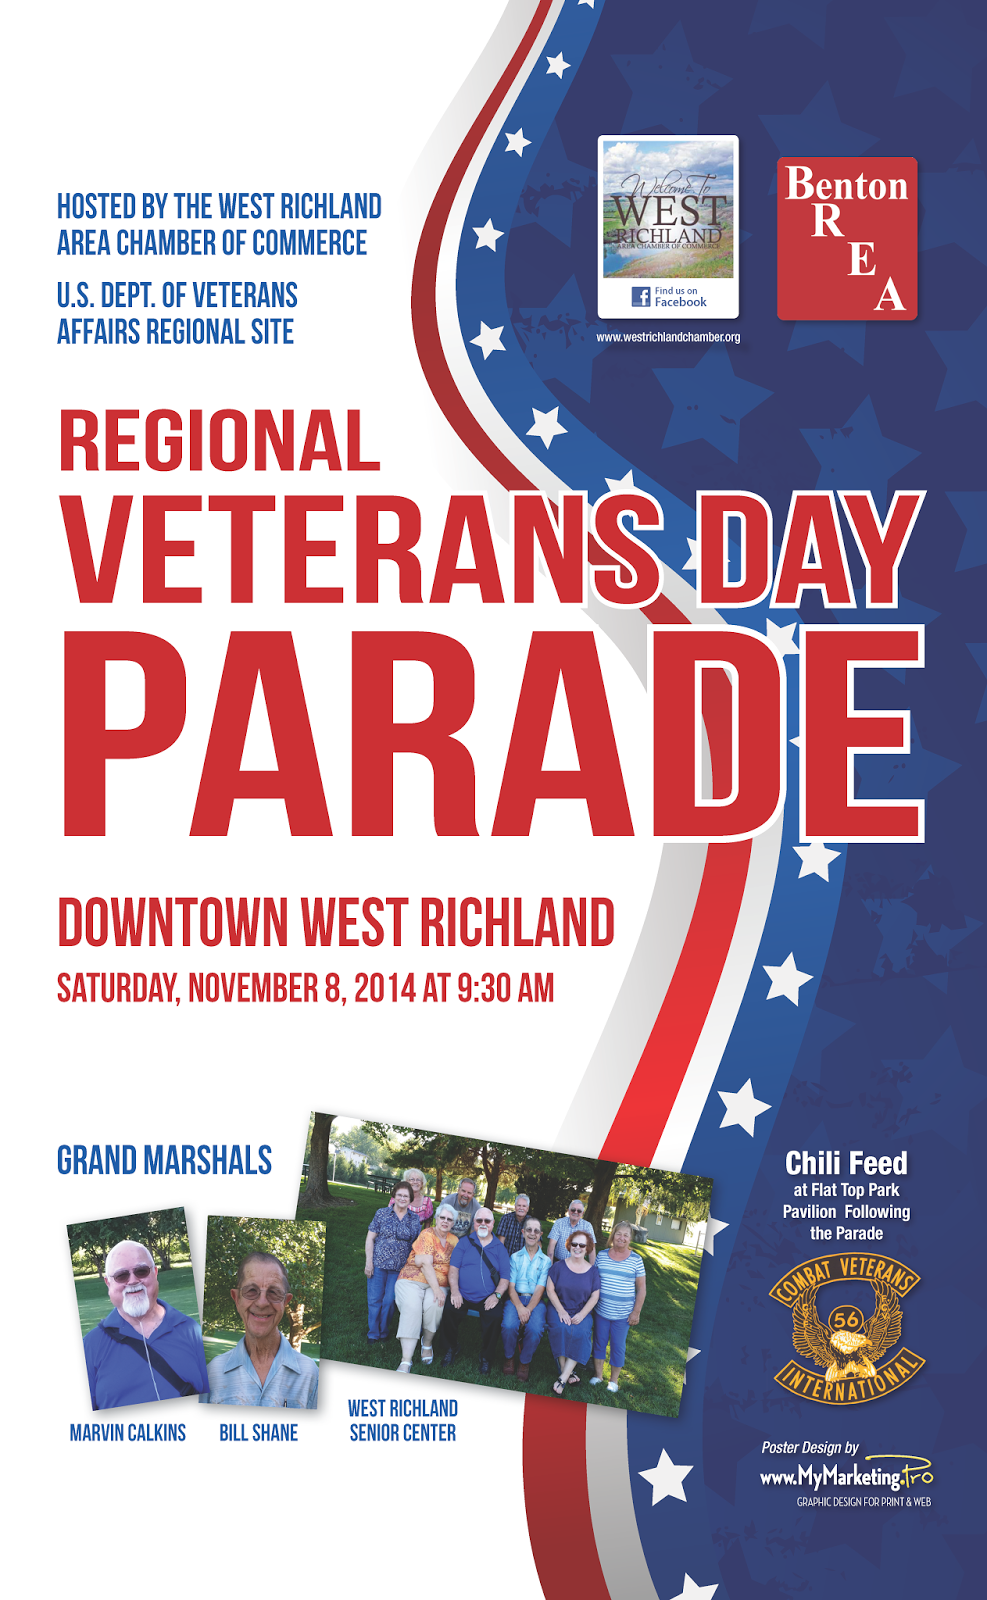 Veteran's Day Parade Downtown West Richland, Washington